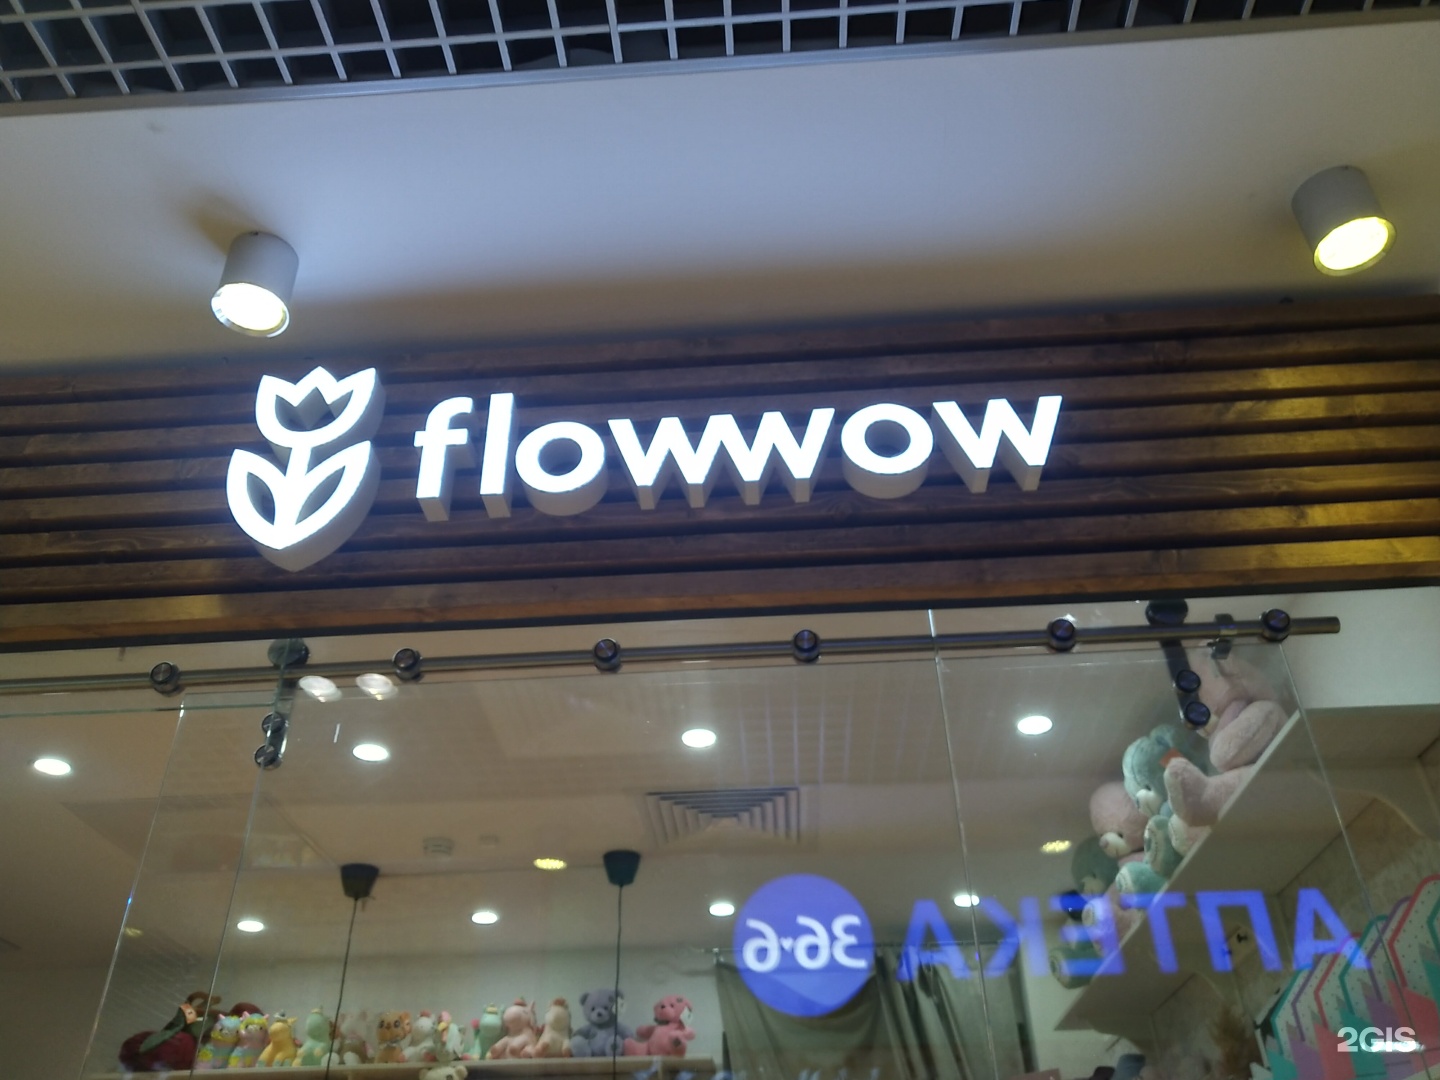 Fmart by flowwow